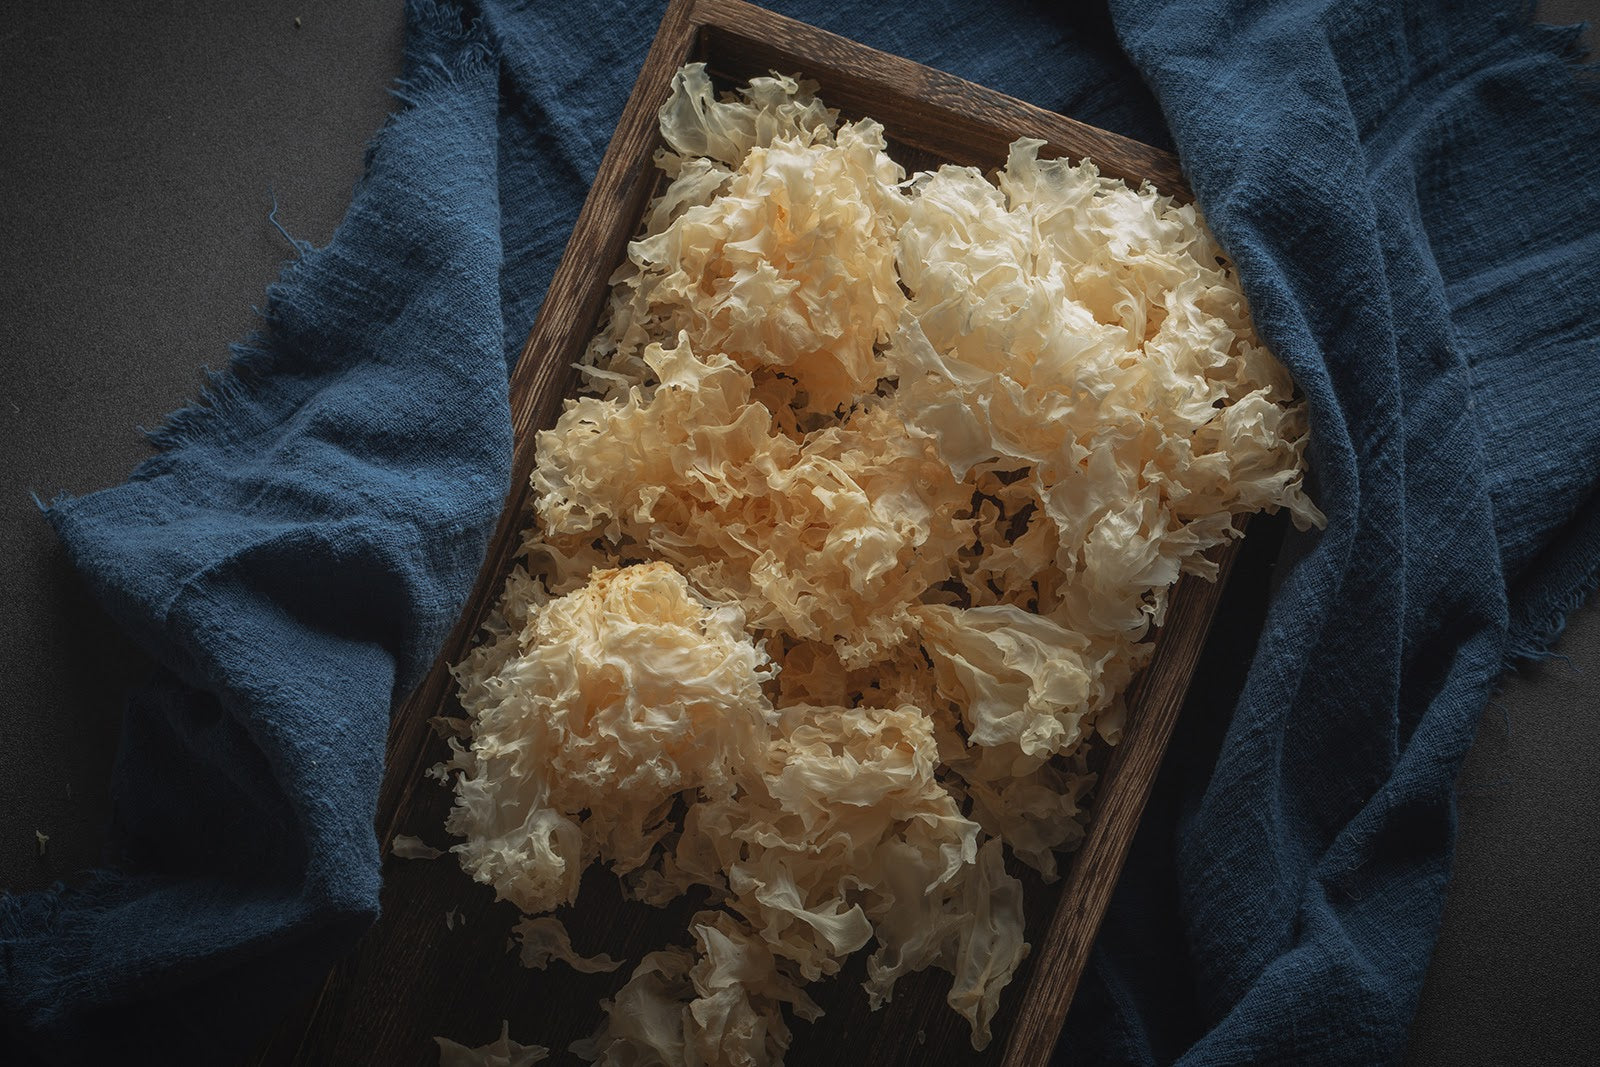 Tremella Mushrooms in a wooden box.